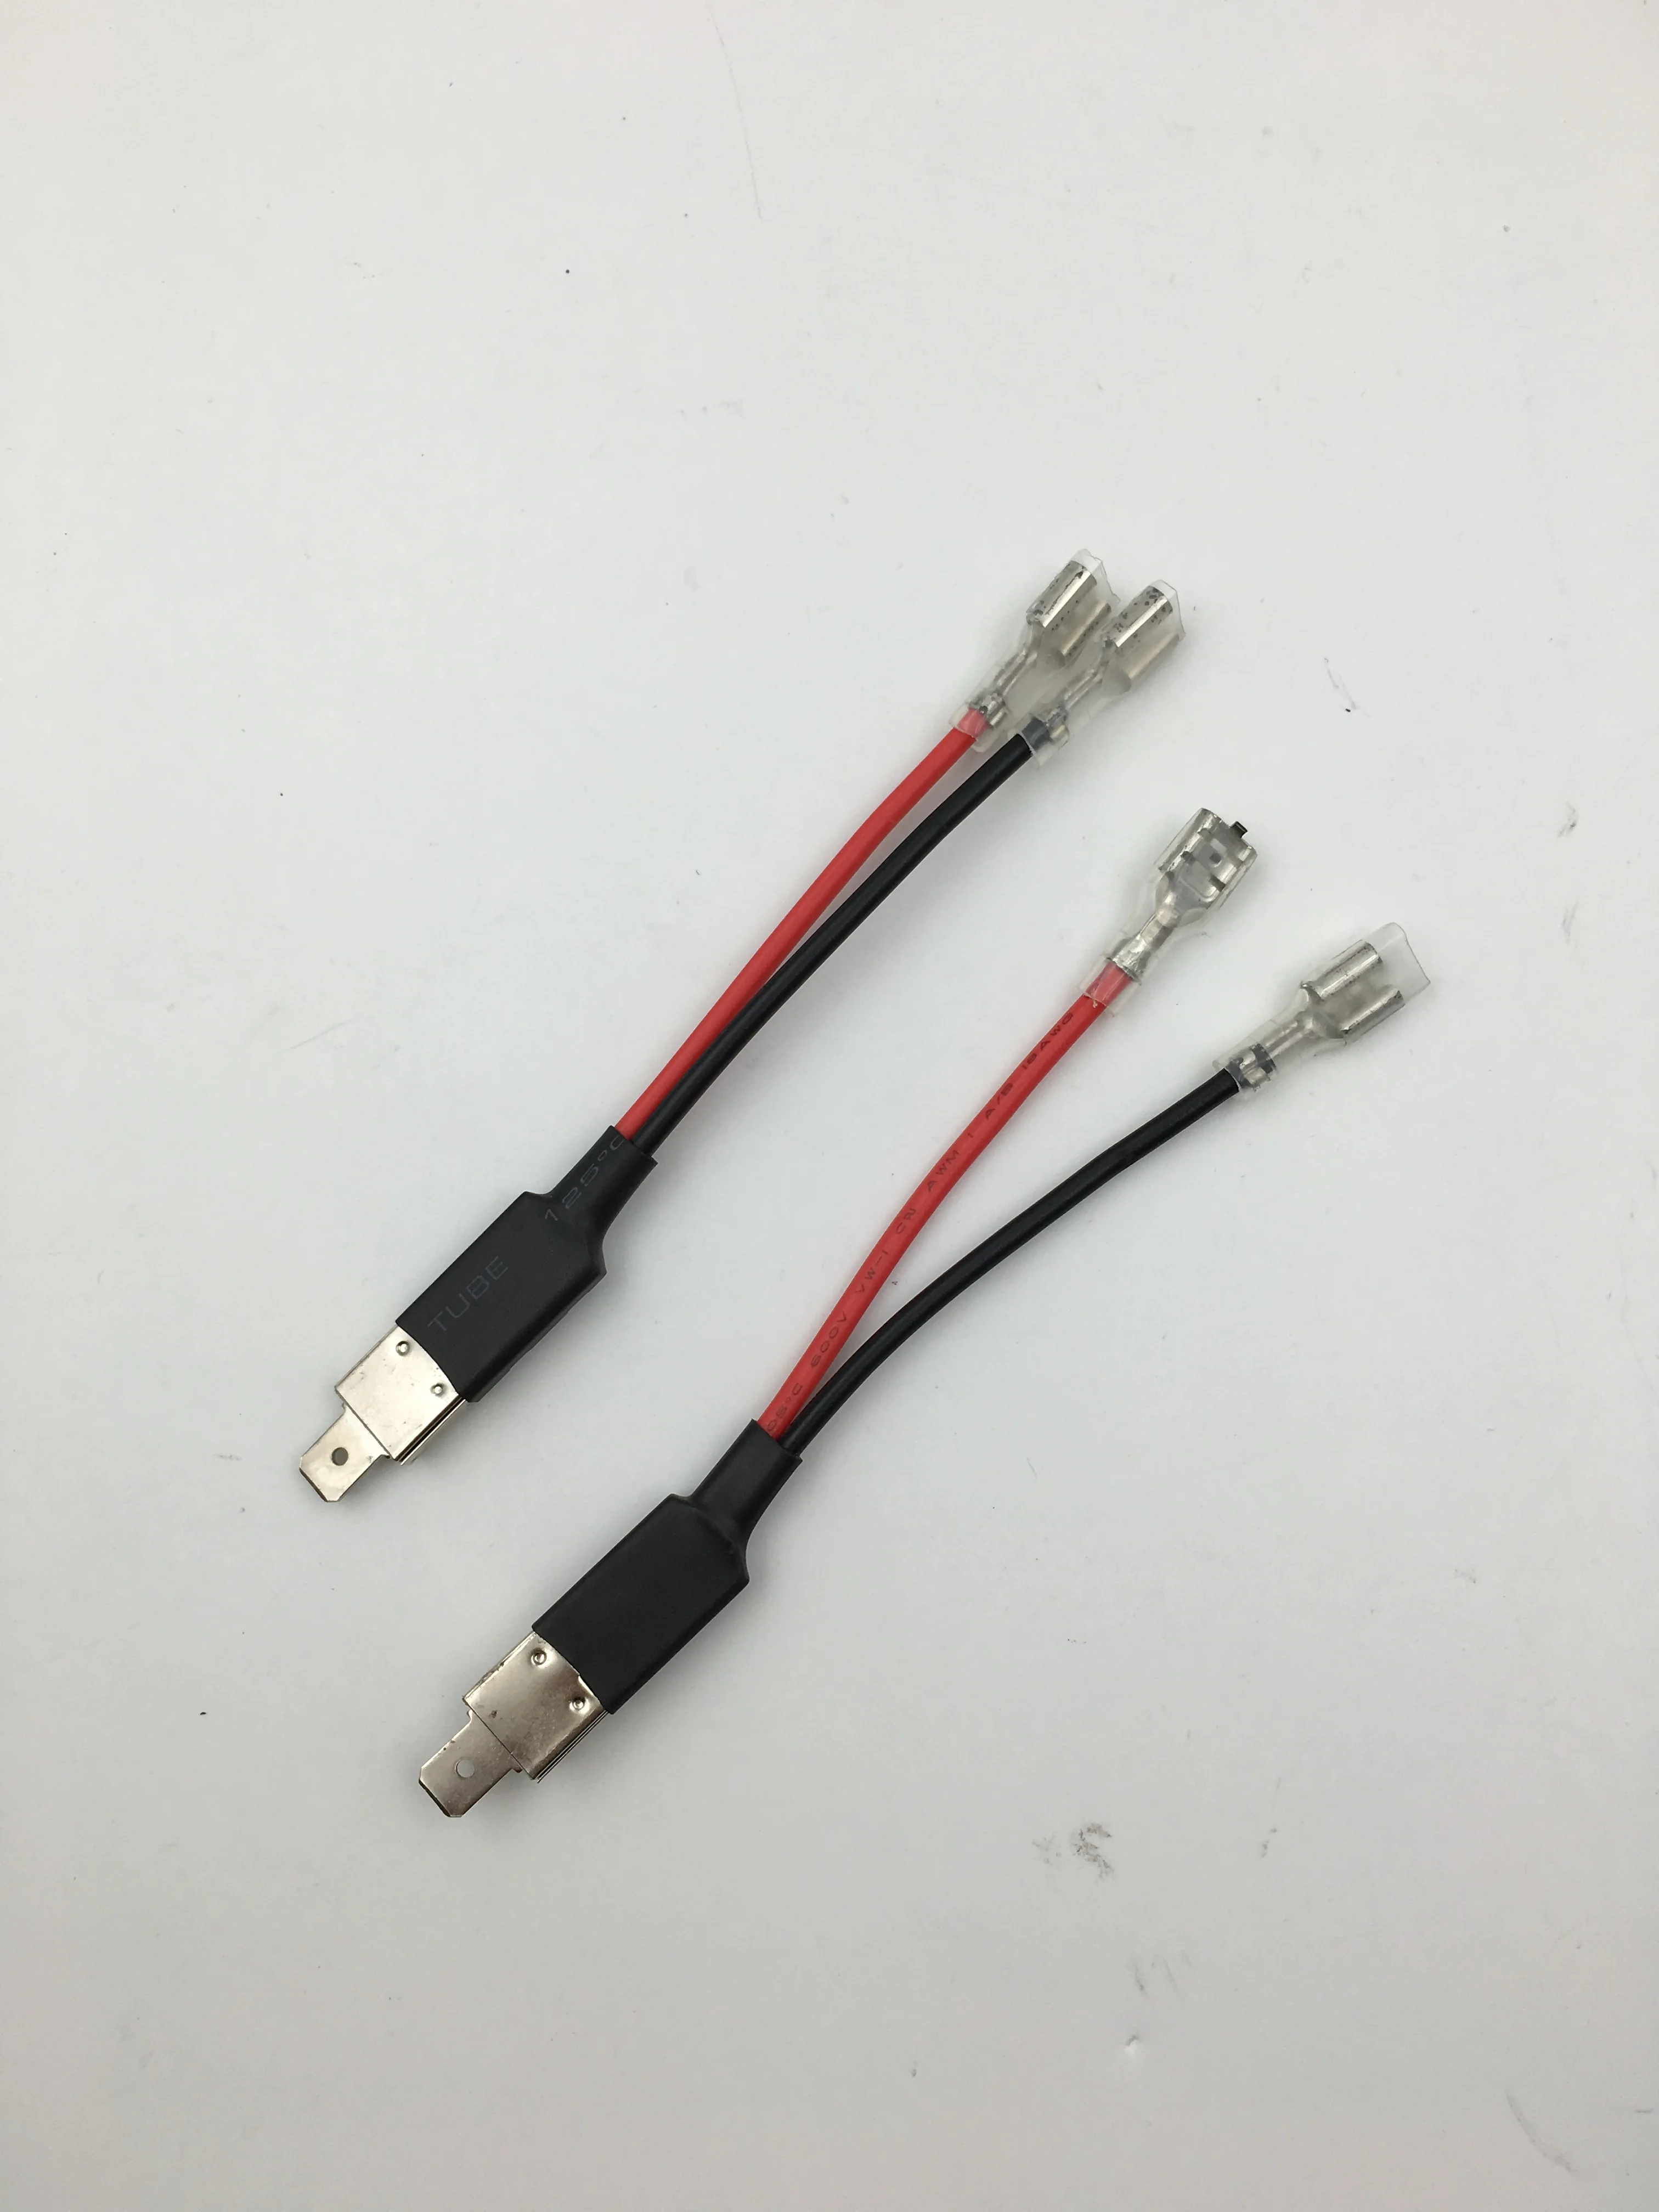 h1 led hid bulb connector socket